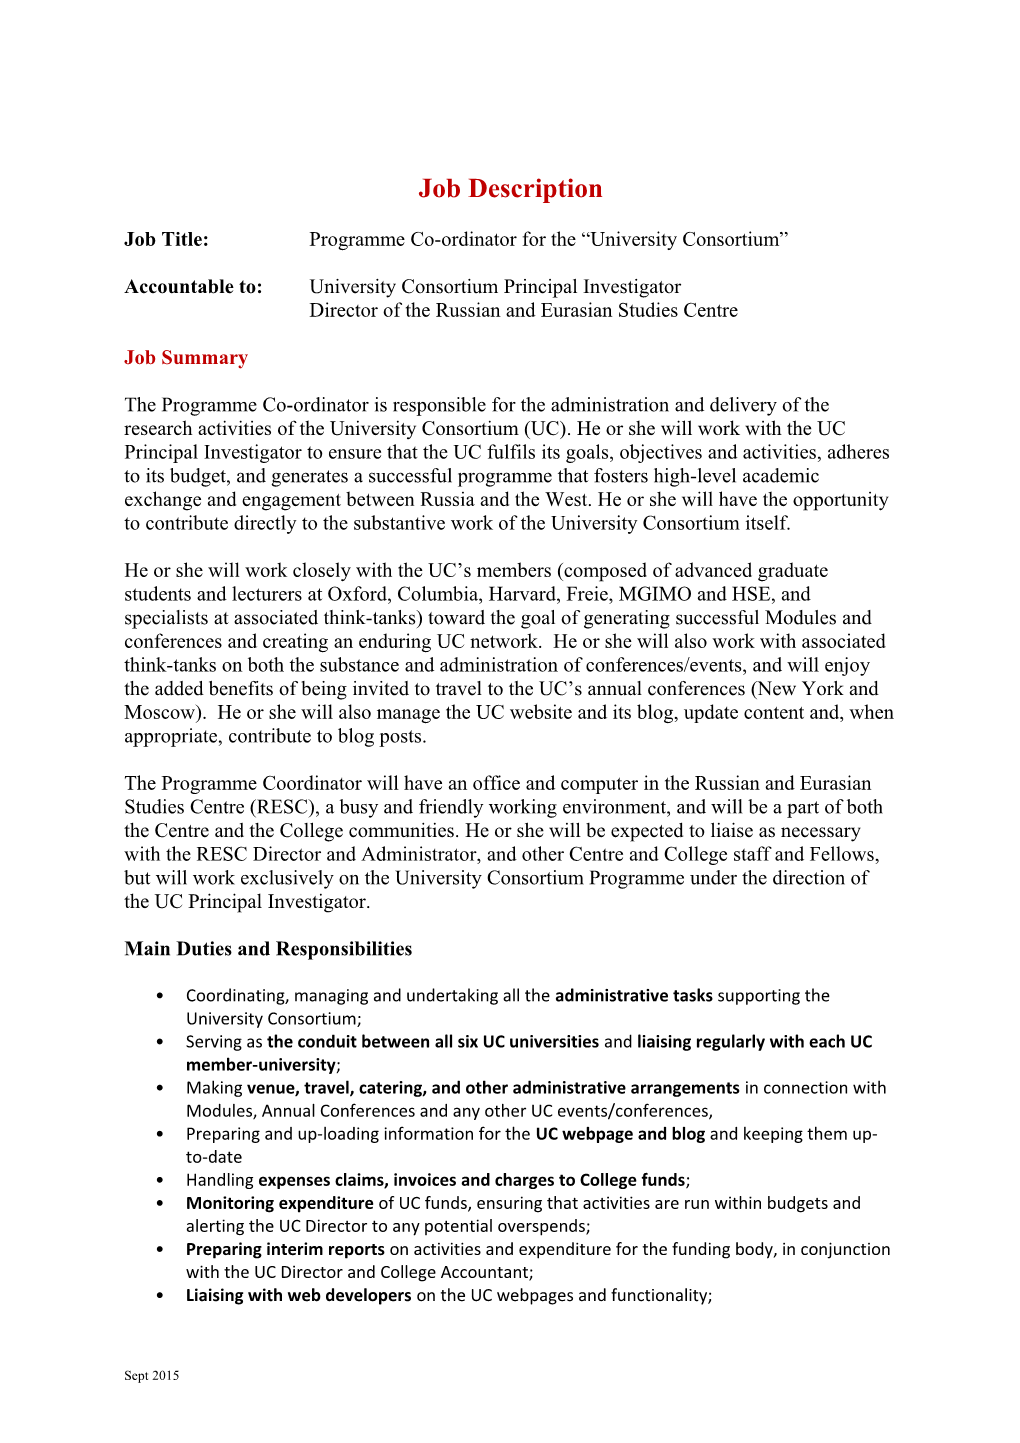 Job Title: Programme Co-Ordinator for the University Consortium